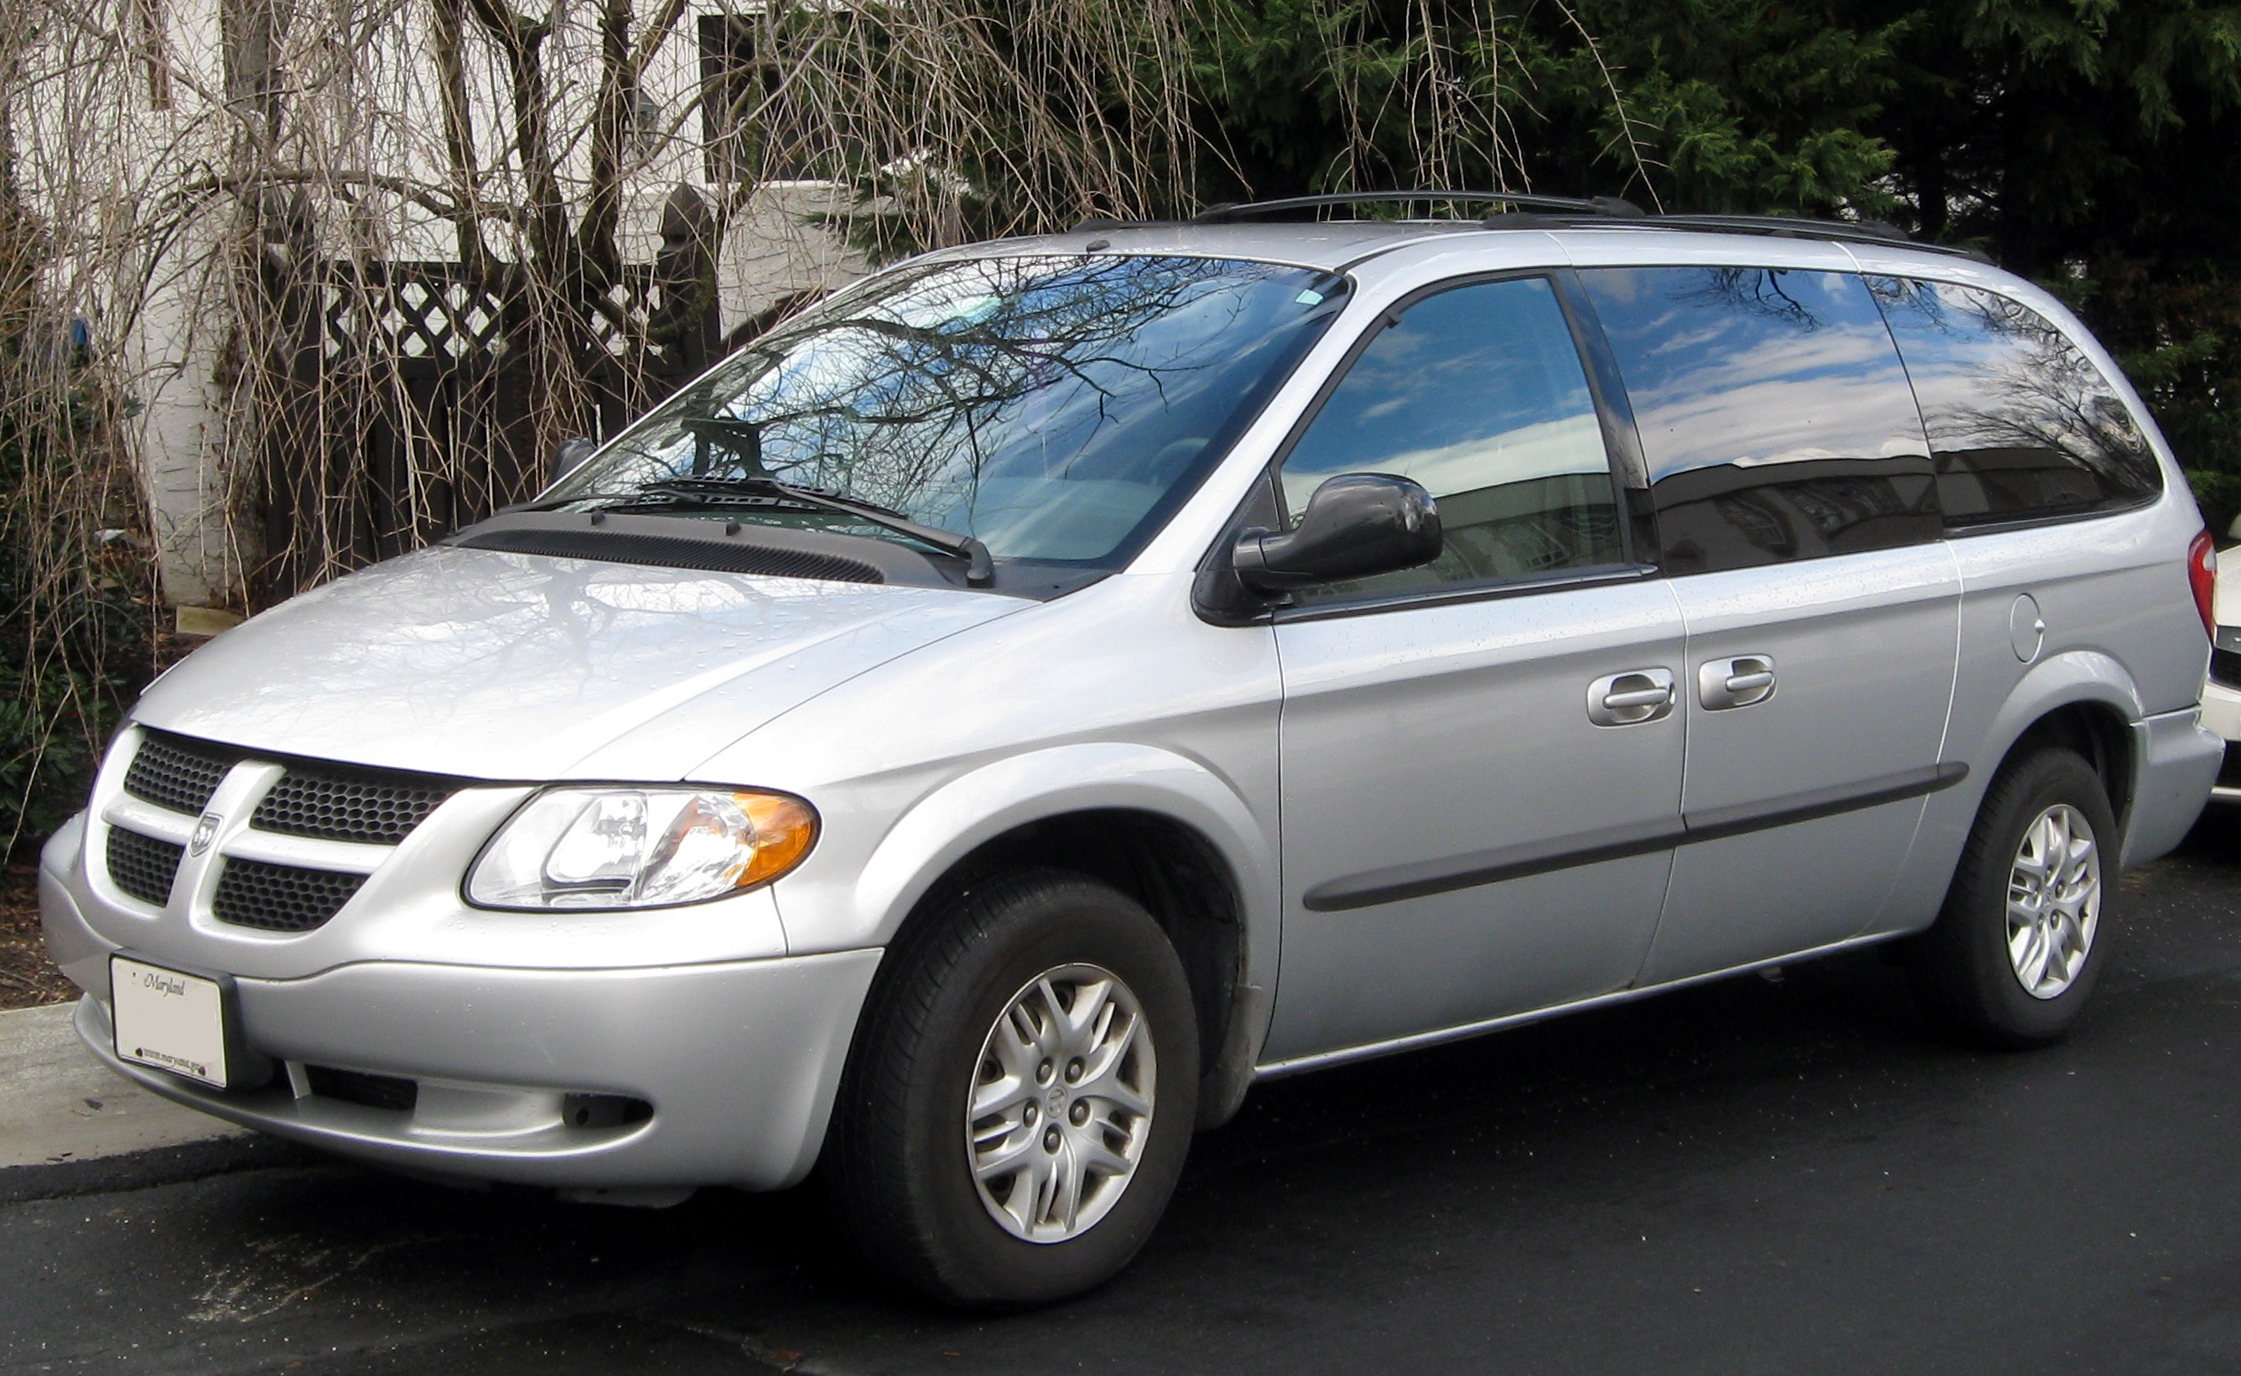 File:2001-2004 Dodge Grand Caravan -- 01-27-2012.jpg - Wikimedia Commons